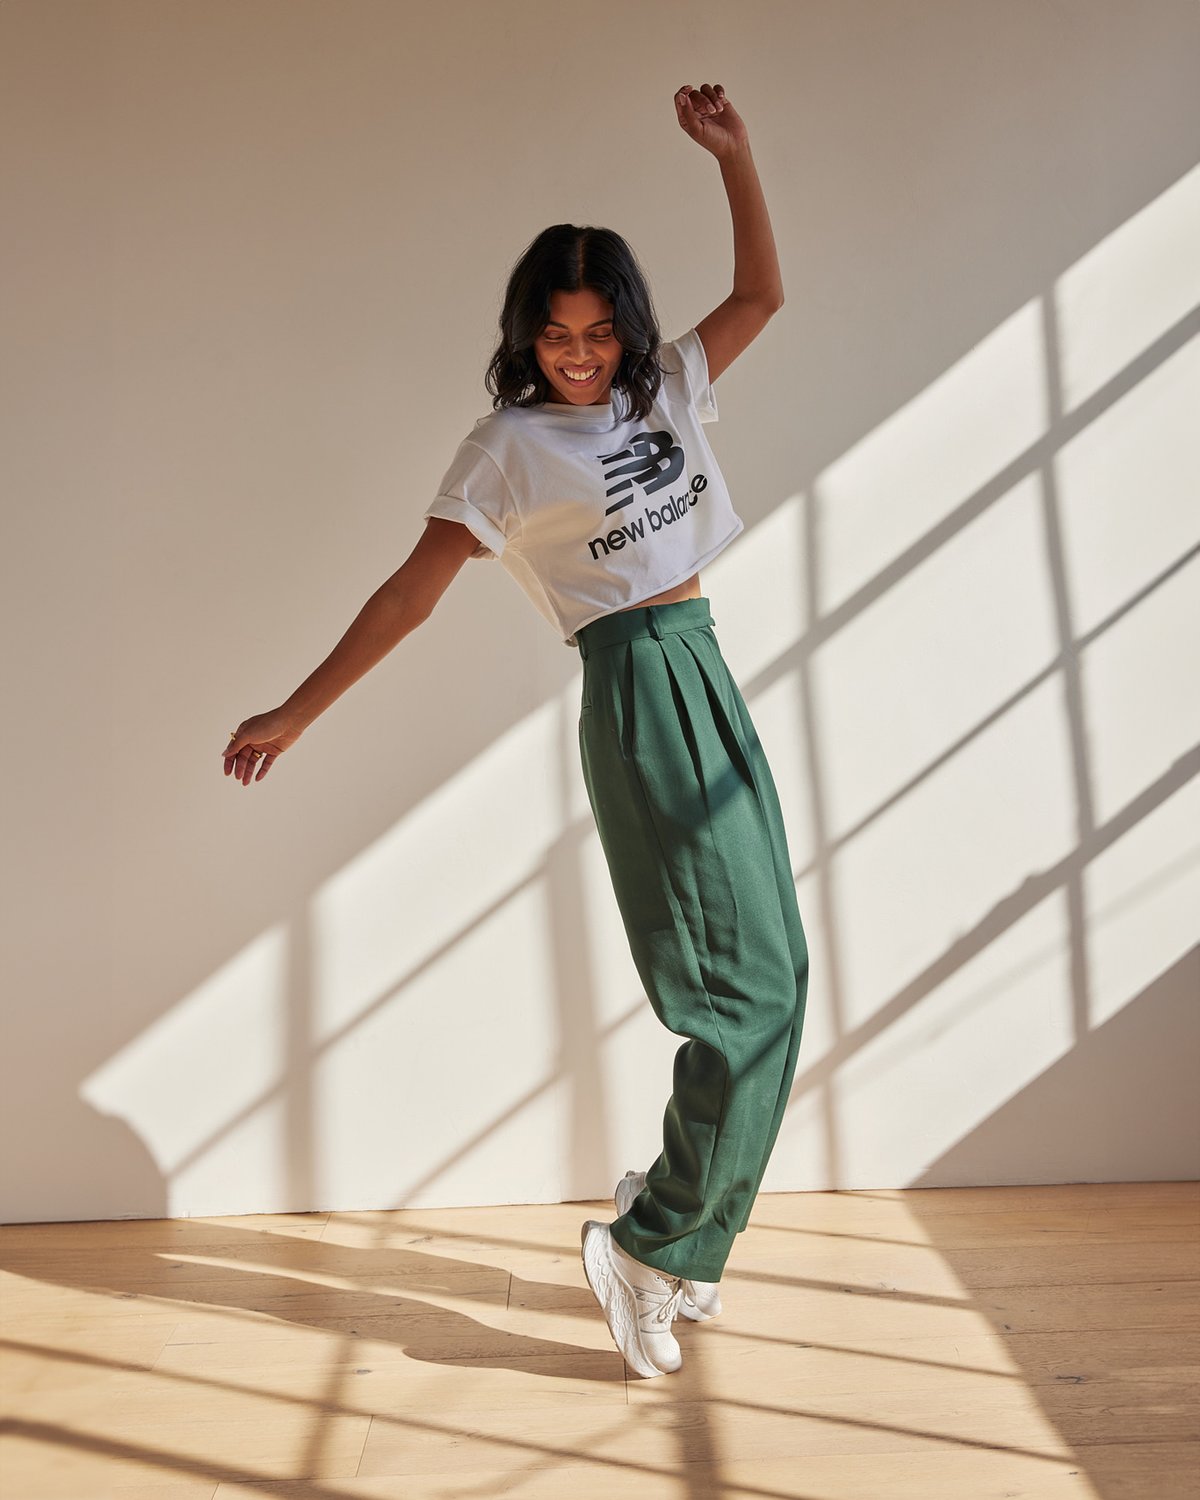 Model dancing in a New Balance t-shirt, green dress pants, and new white kicks